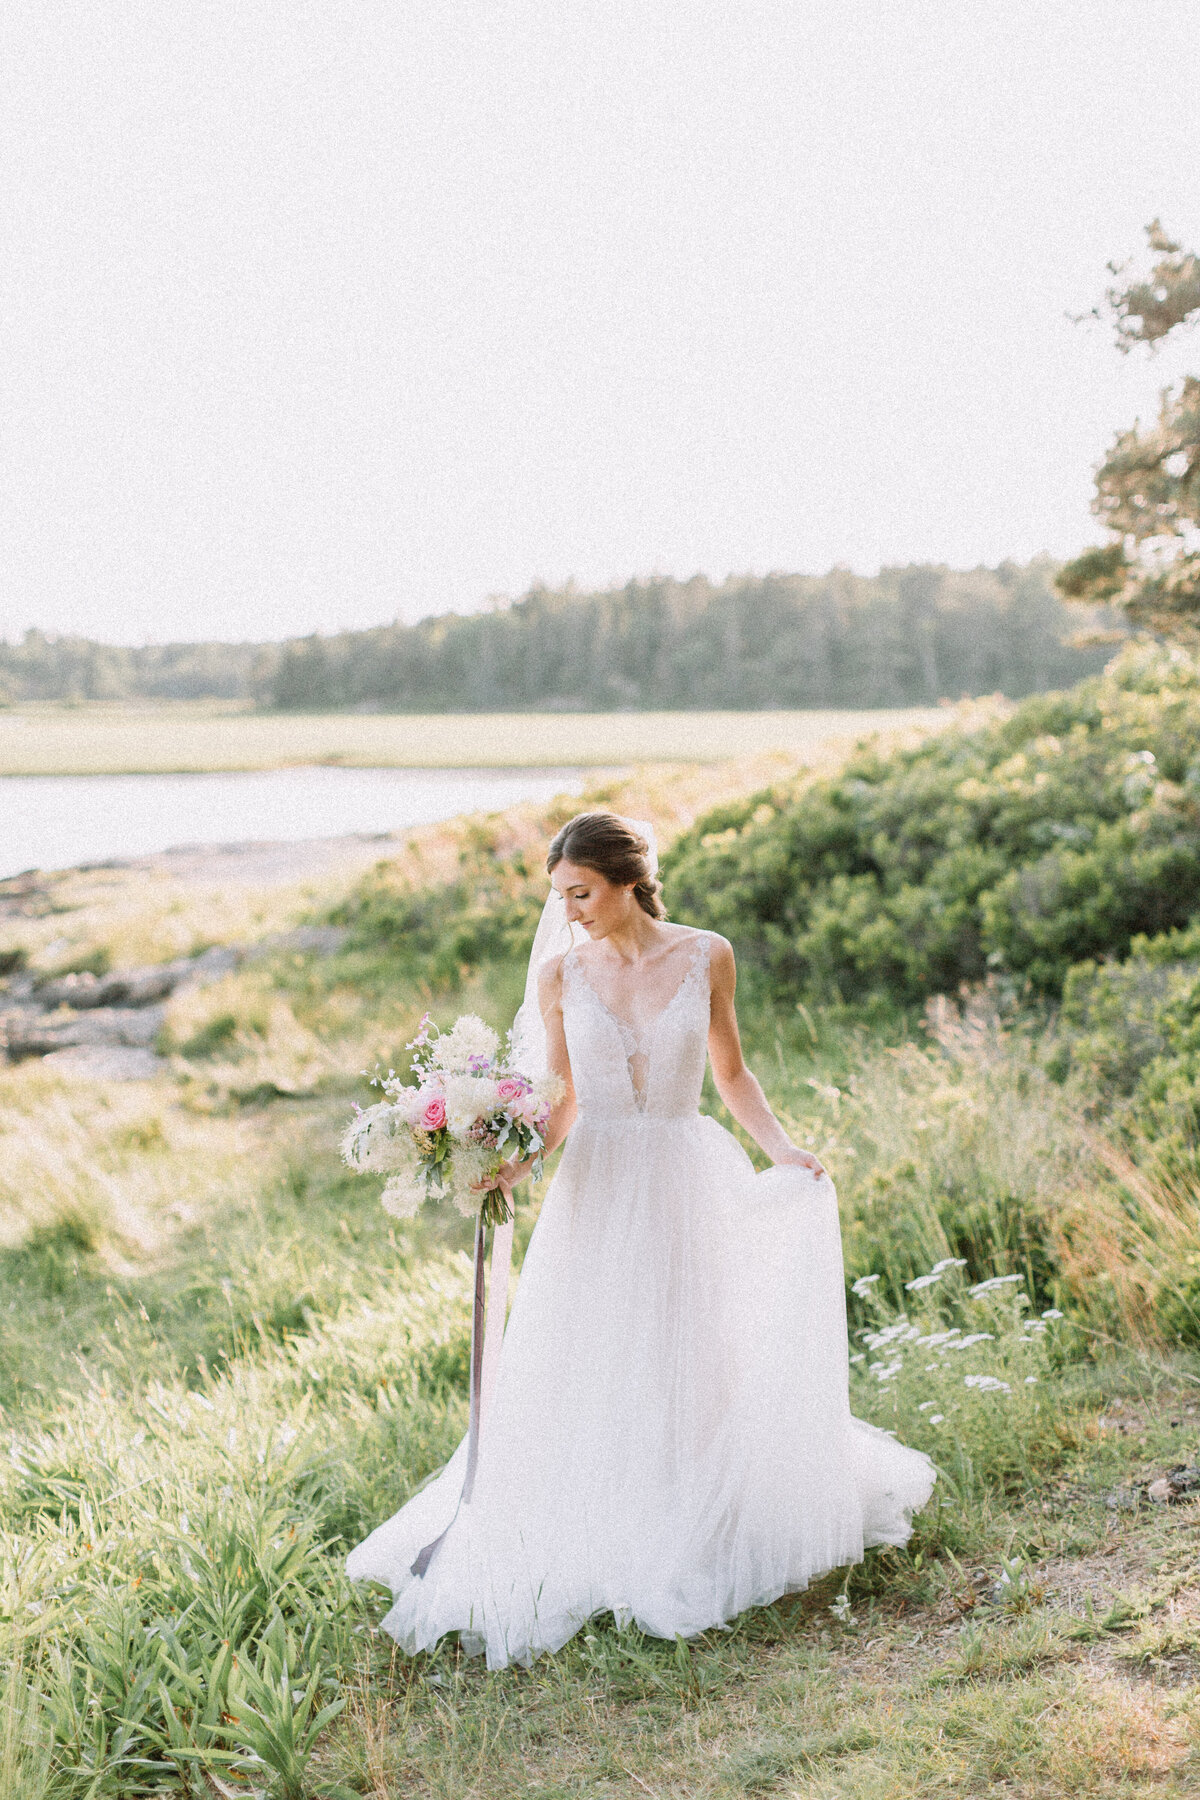 Lex Nelson Photography Maine New England East Coast Costal Wedding Engagement Photographer Natural Light Timeless Romantic Joyful 25